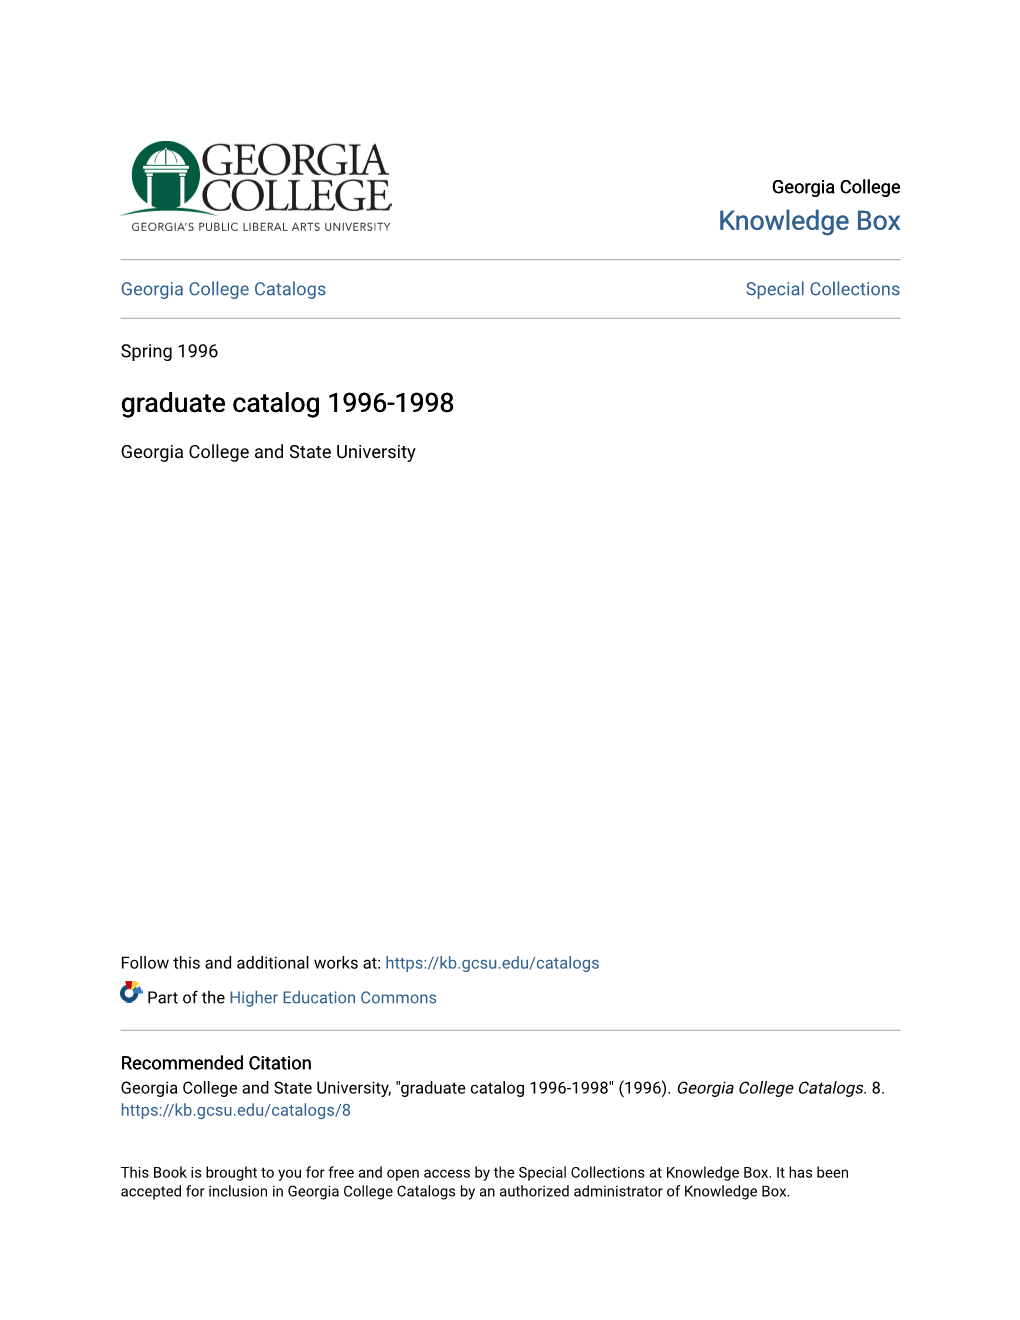 Graduate Catalog 1996-1998